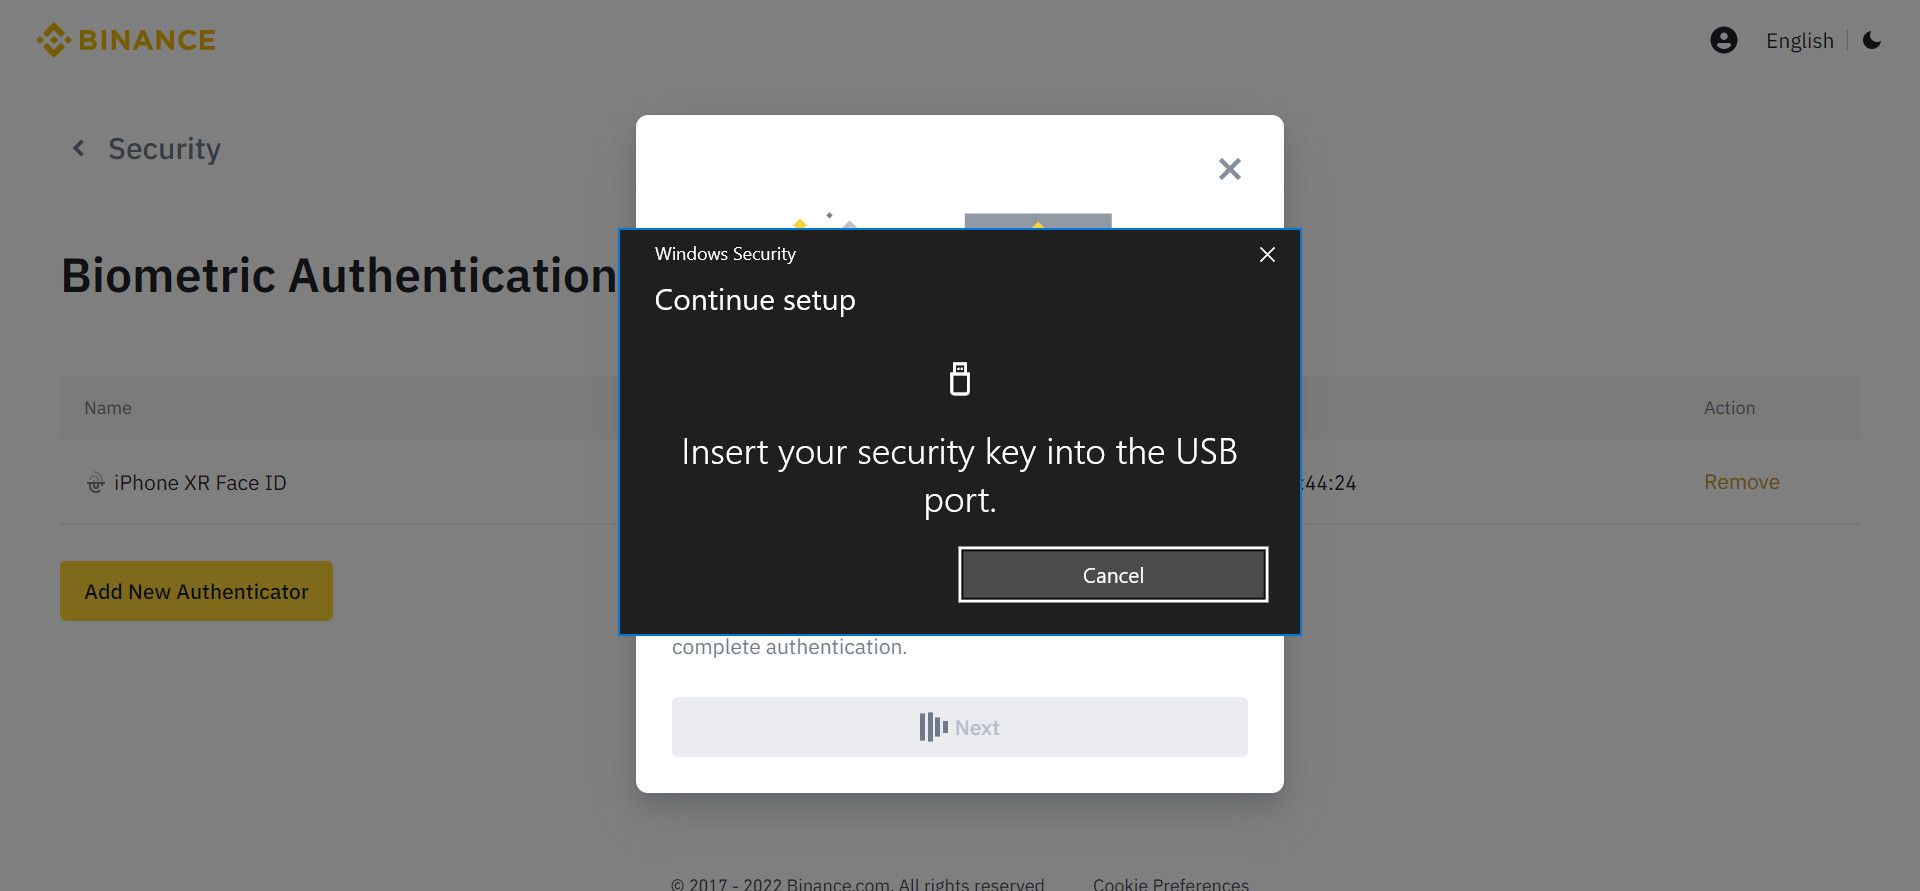 Security key insertion instruction